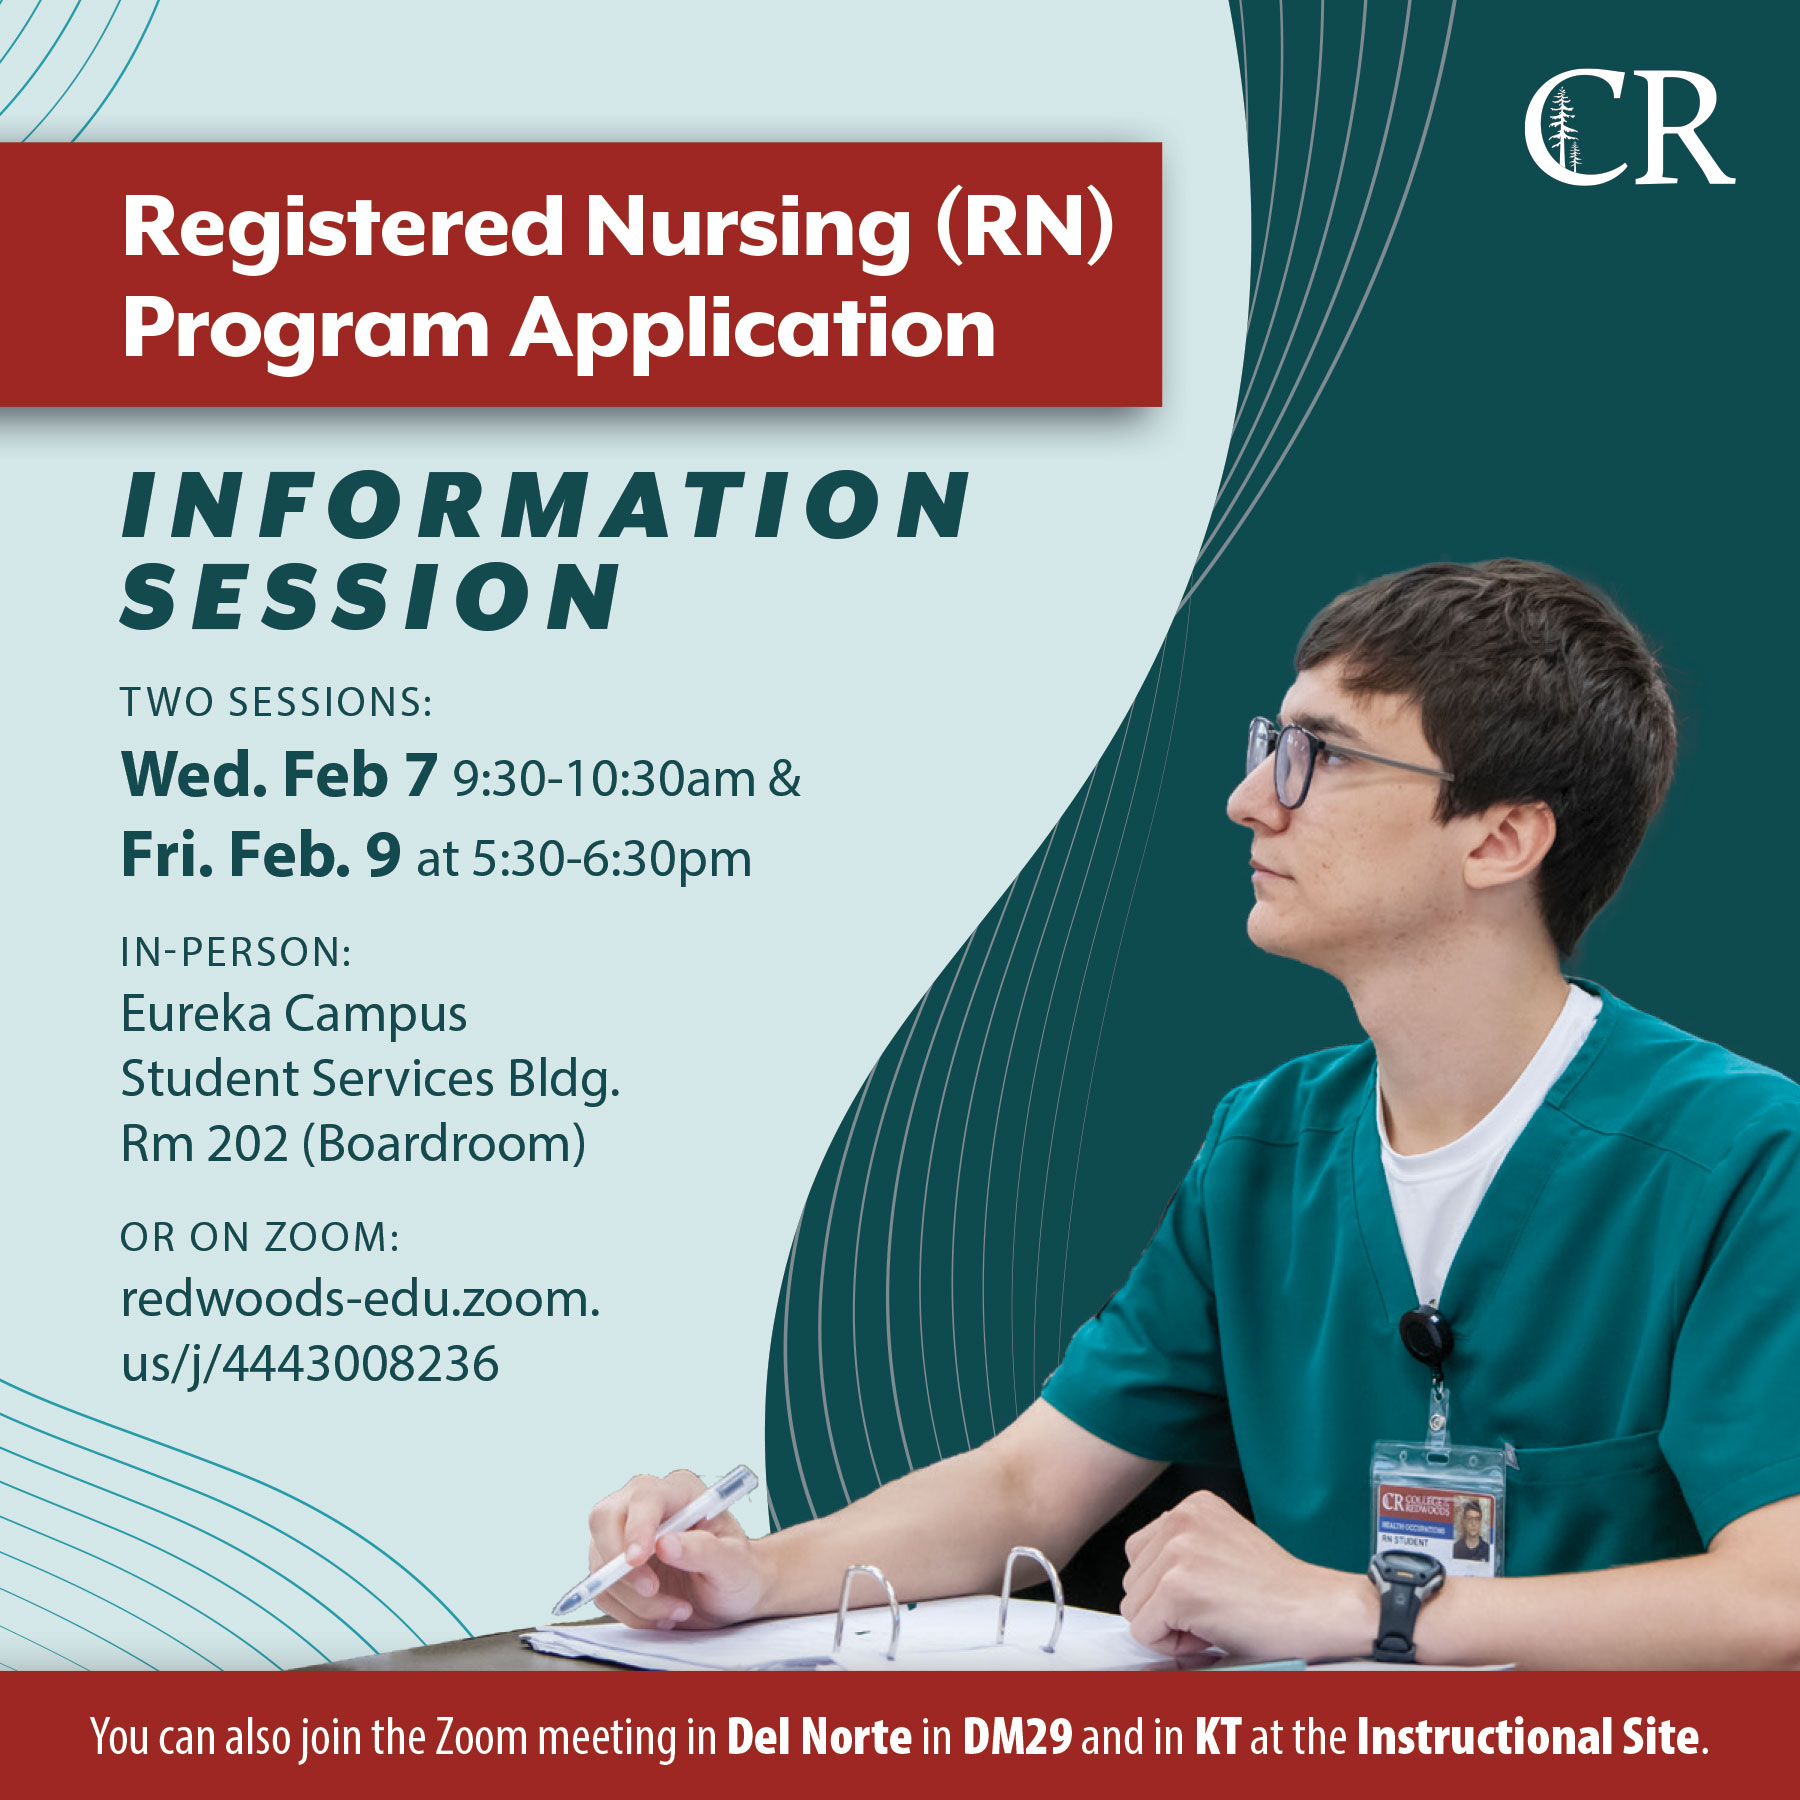 Registered Nursing (RN) Program Application Information Session